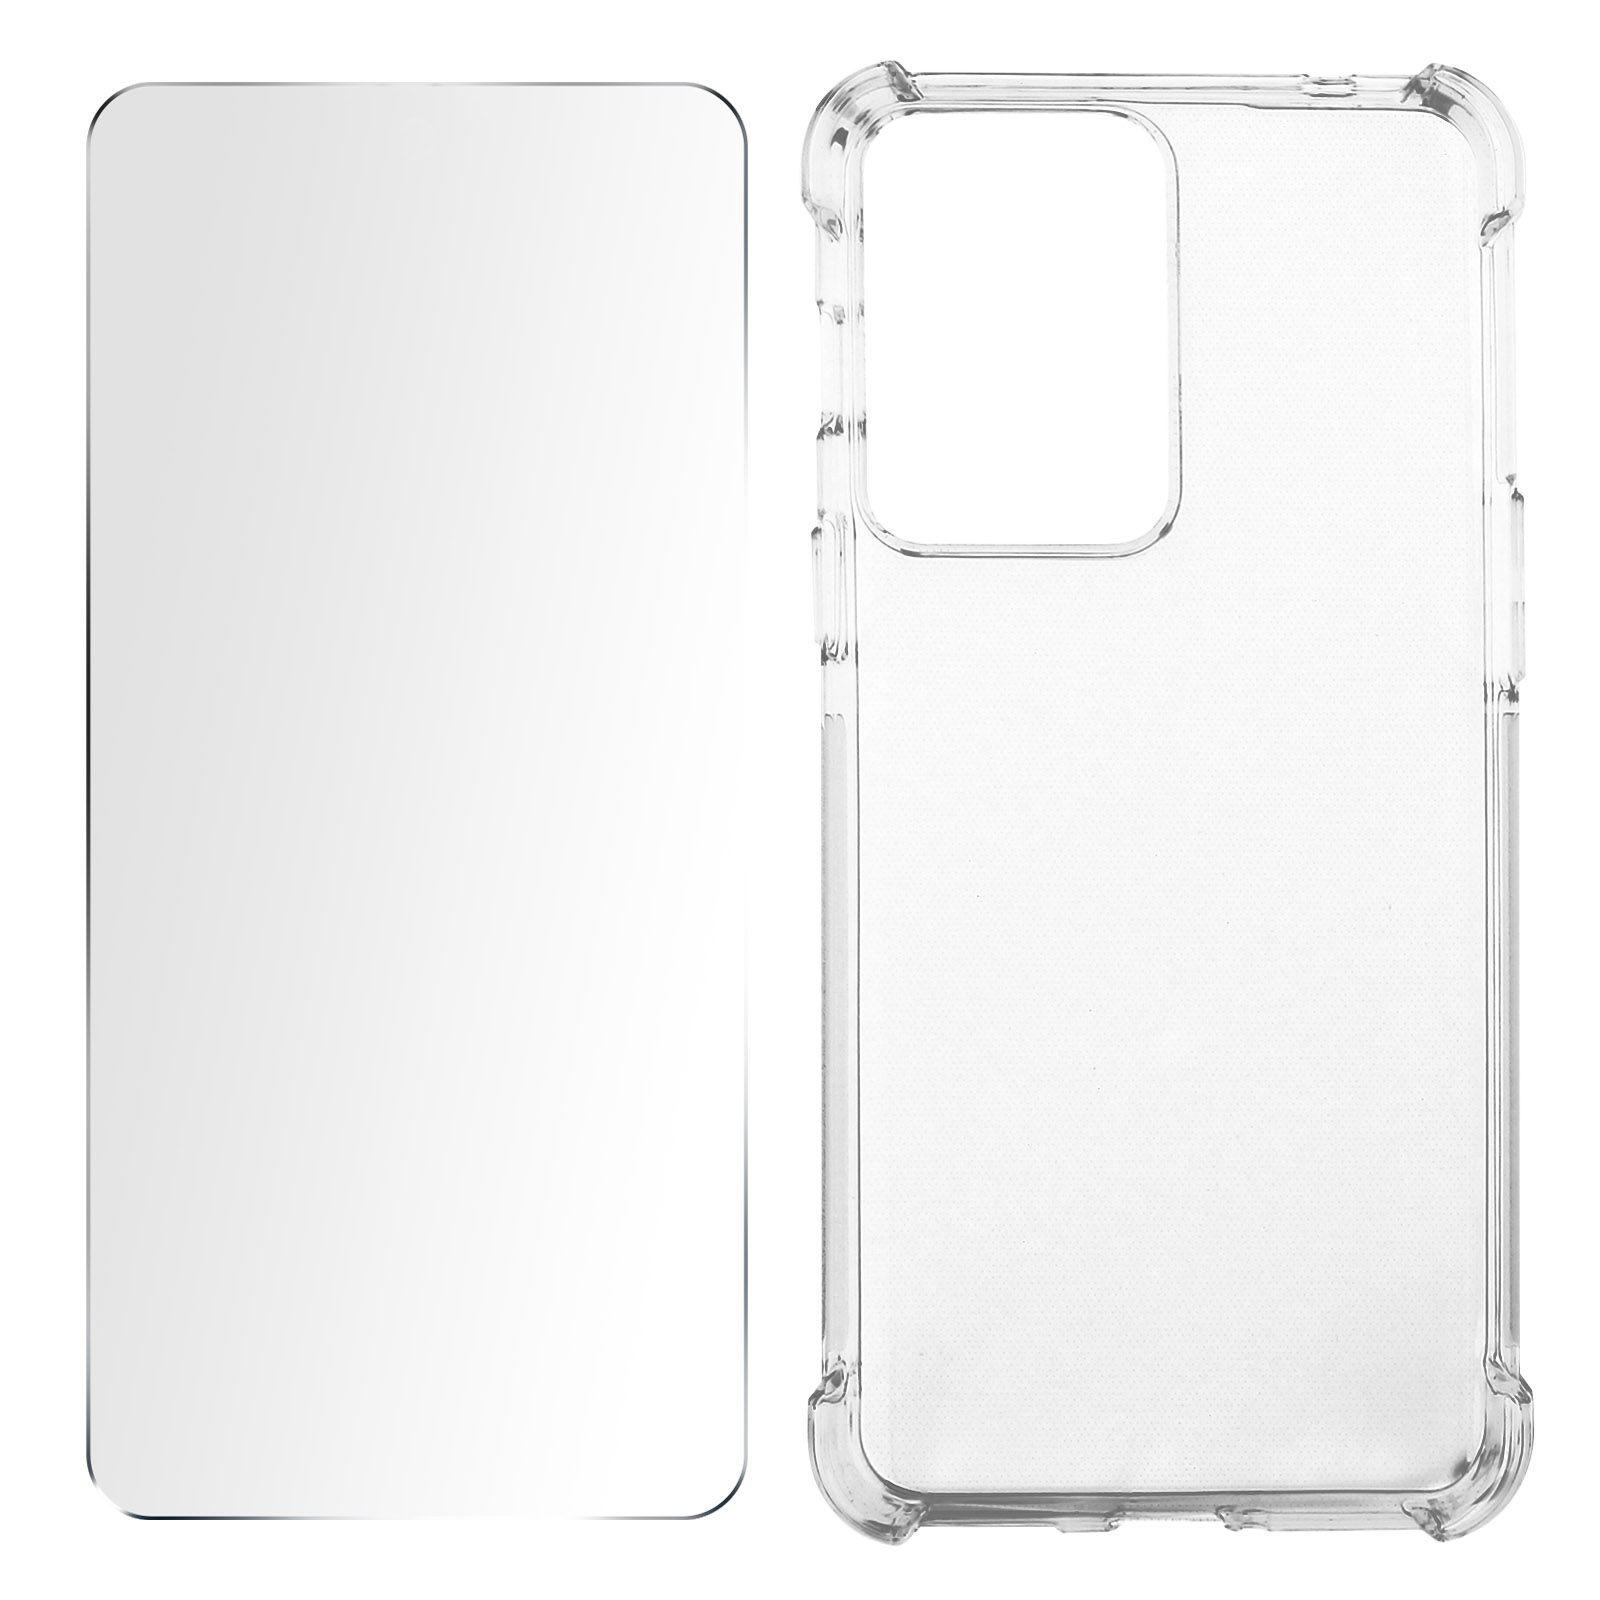 Series, Premium Folie OnePlus, + Nord 2T, AVIZAR Transparent Backcover, Schutz-Set: Hülle